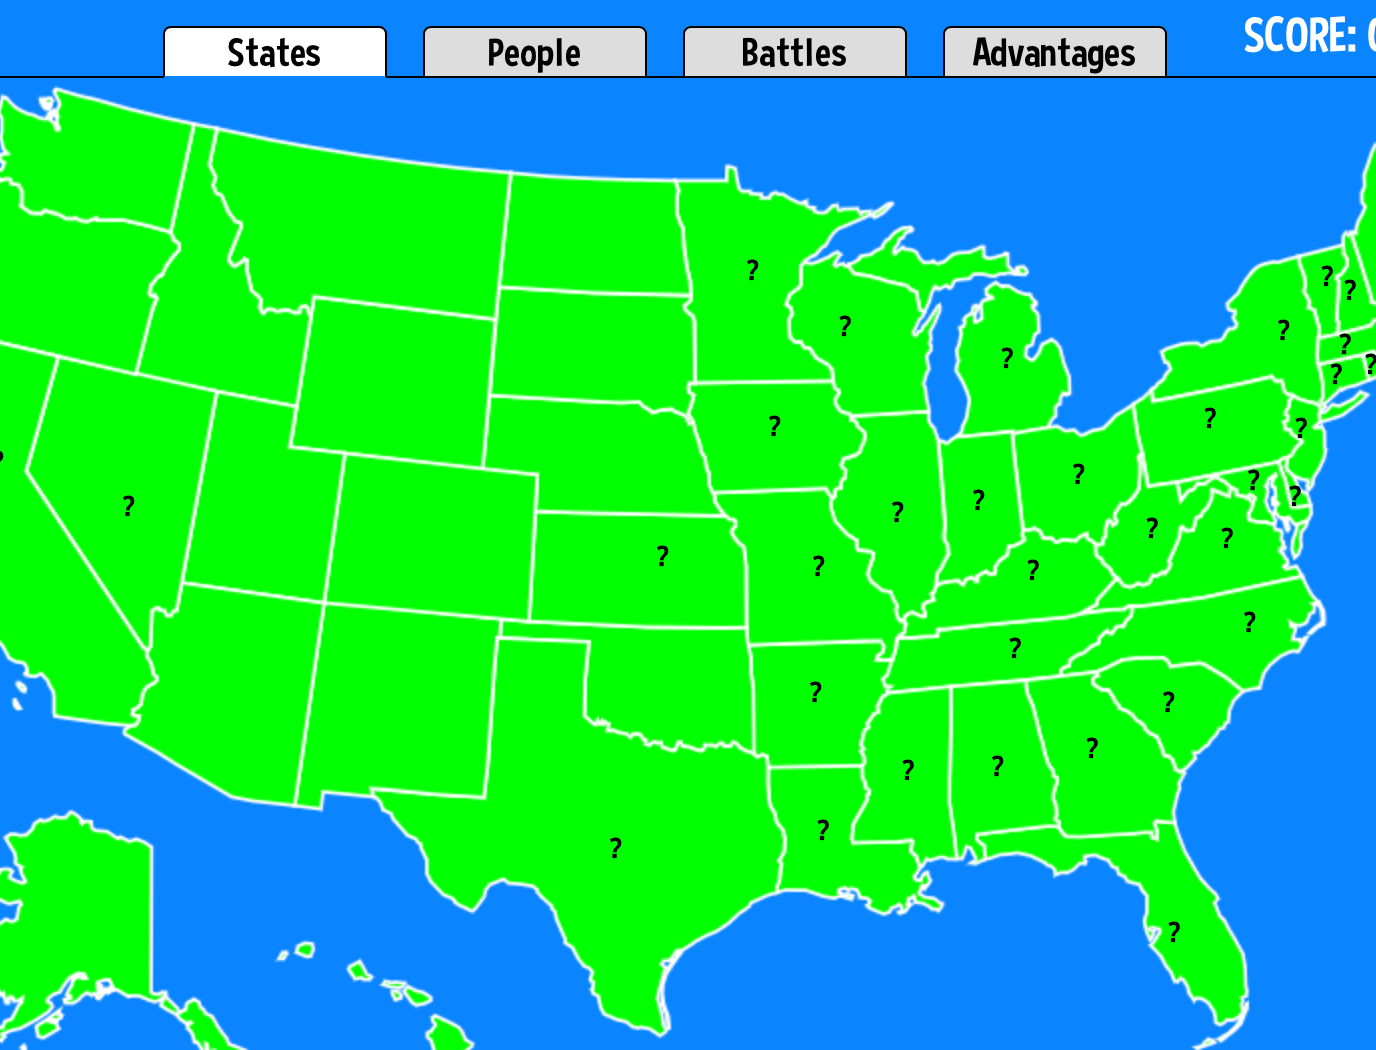 civil war maps for kids